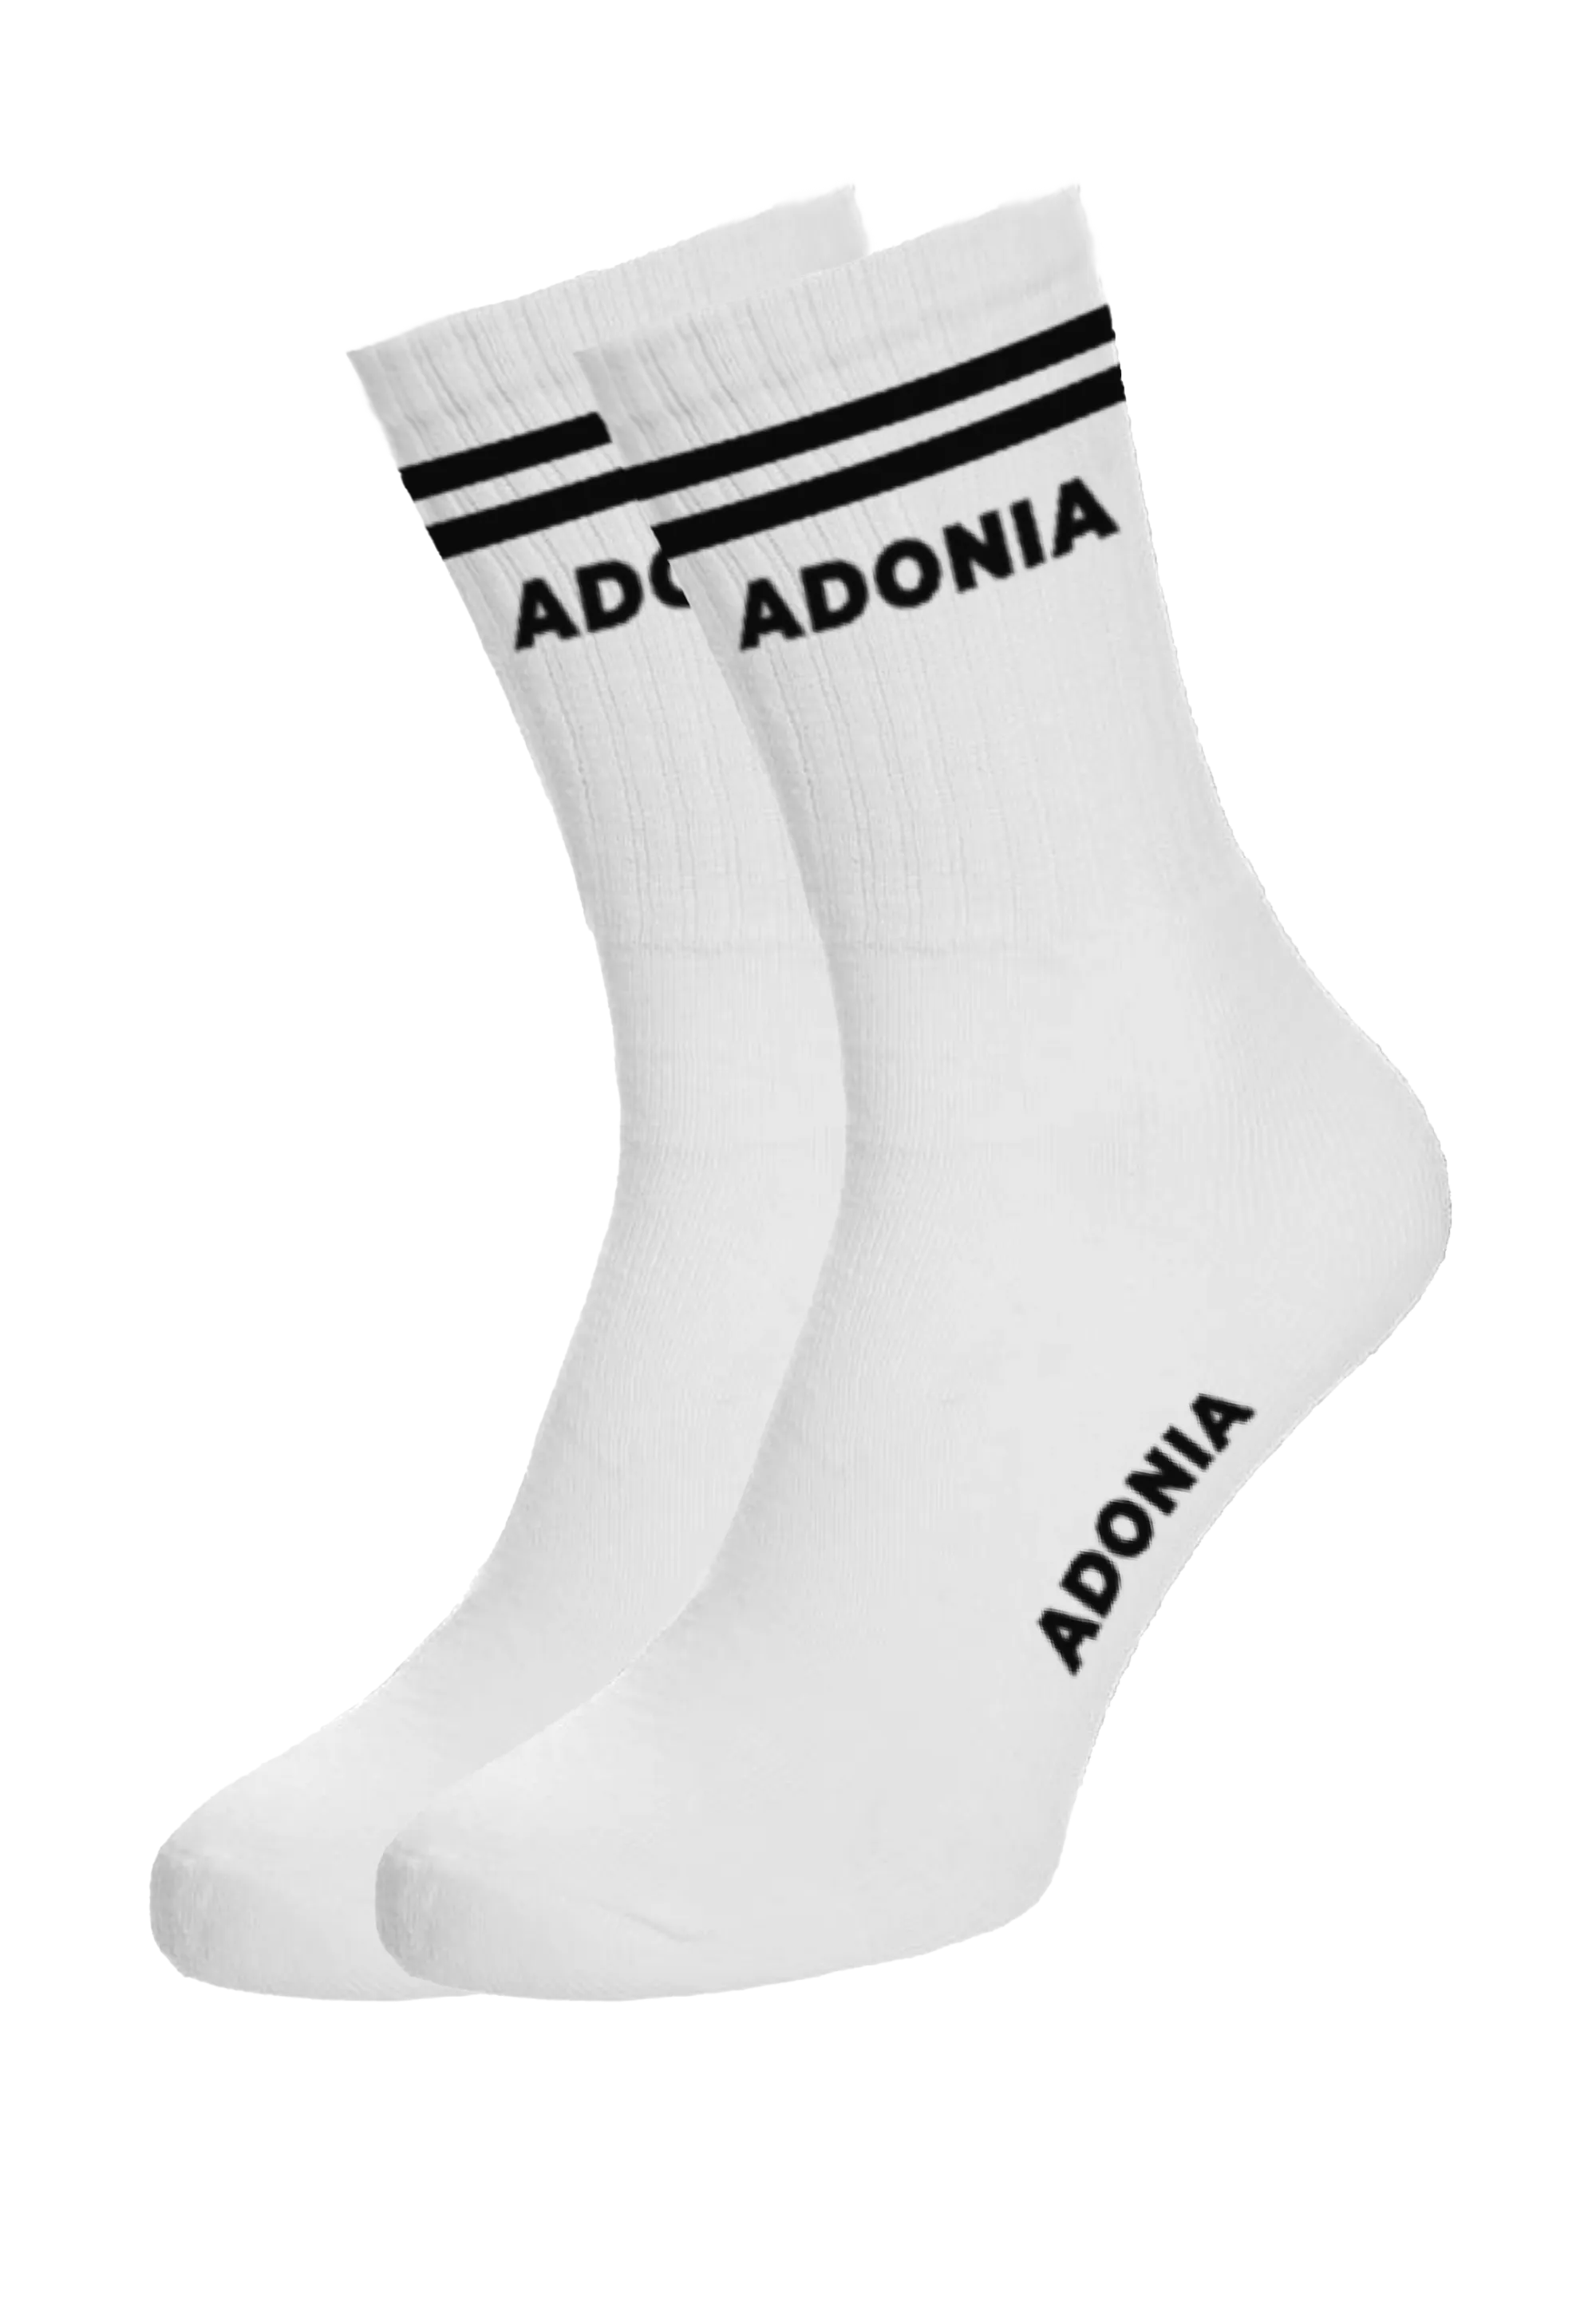 Adonia Streifen Socken - Duopack